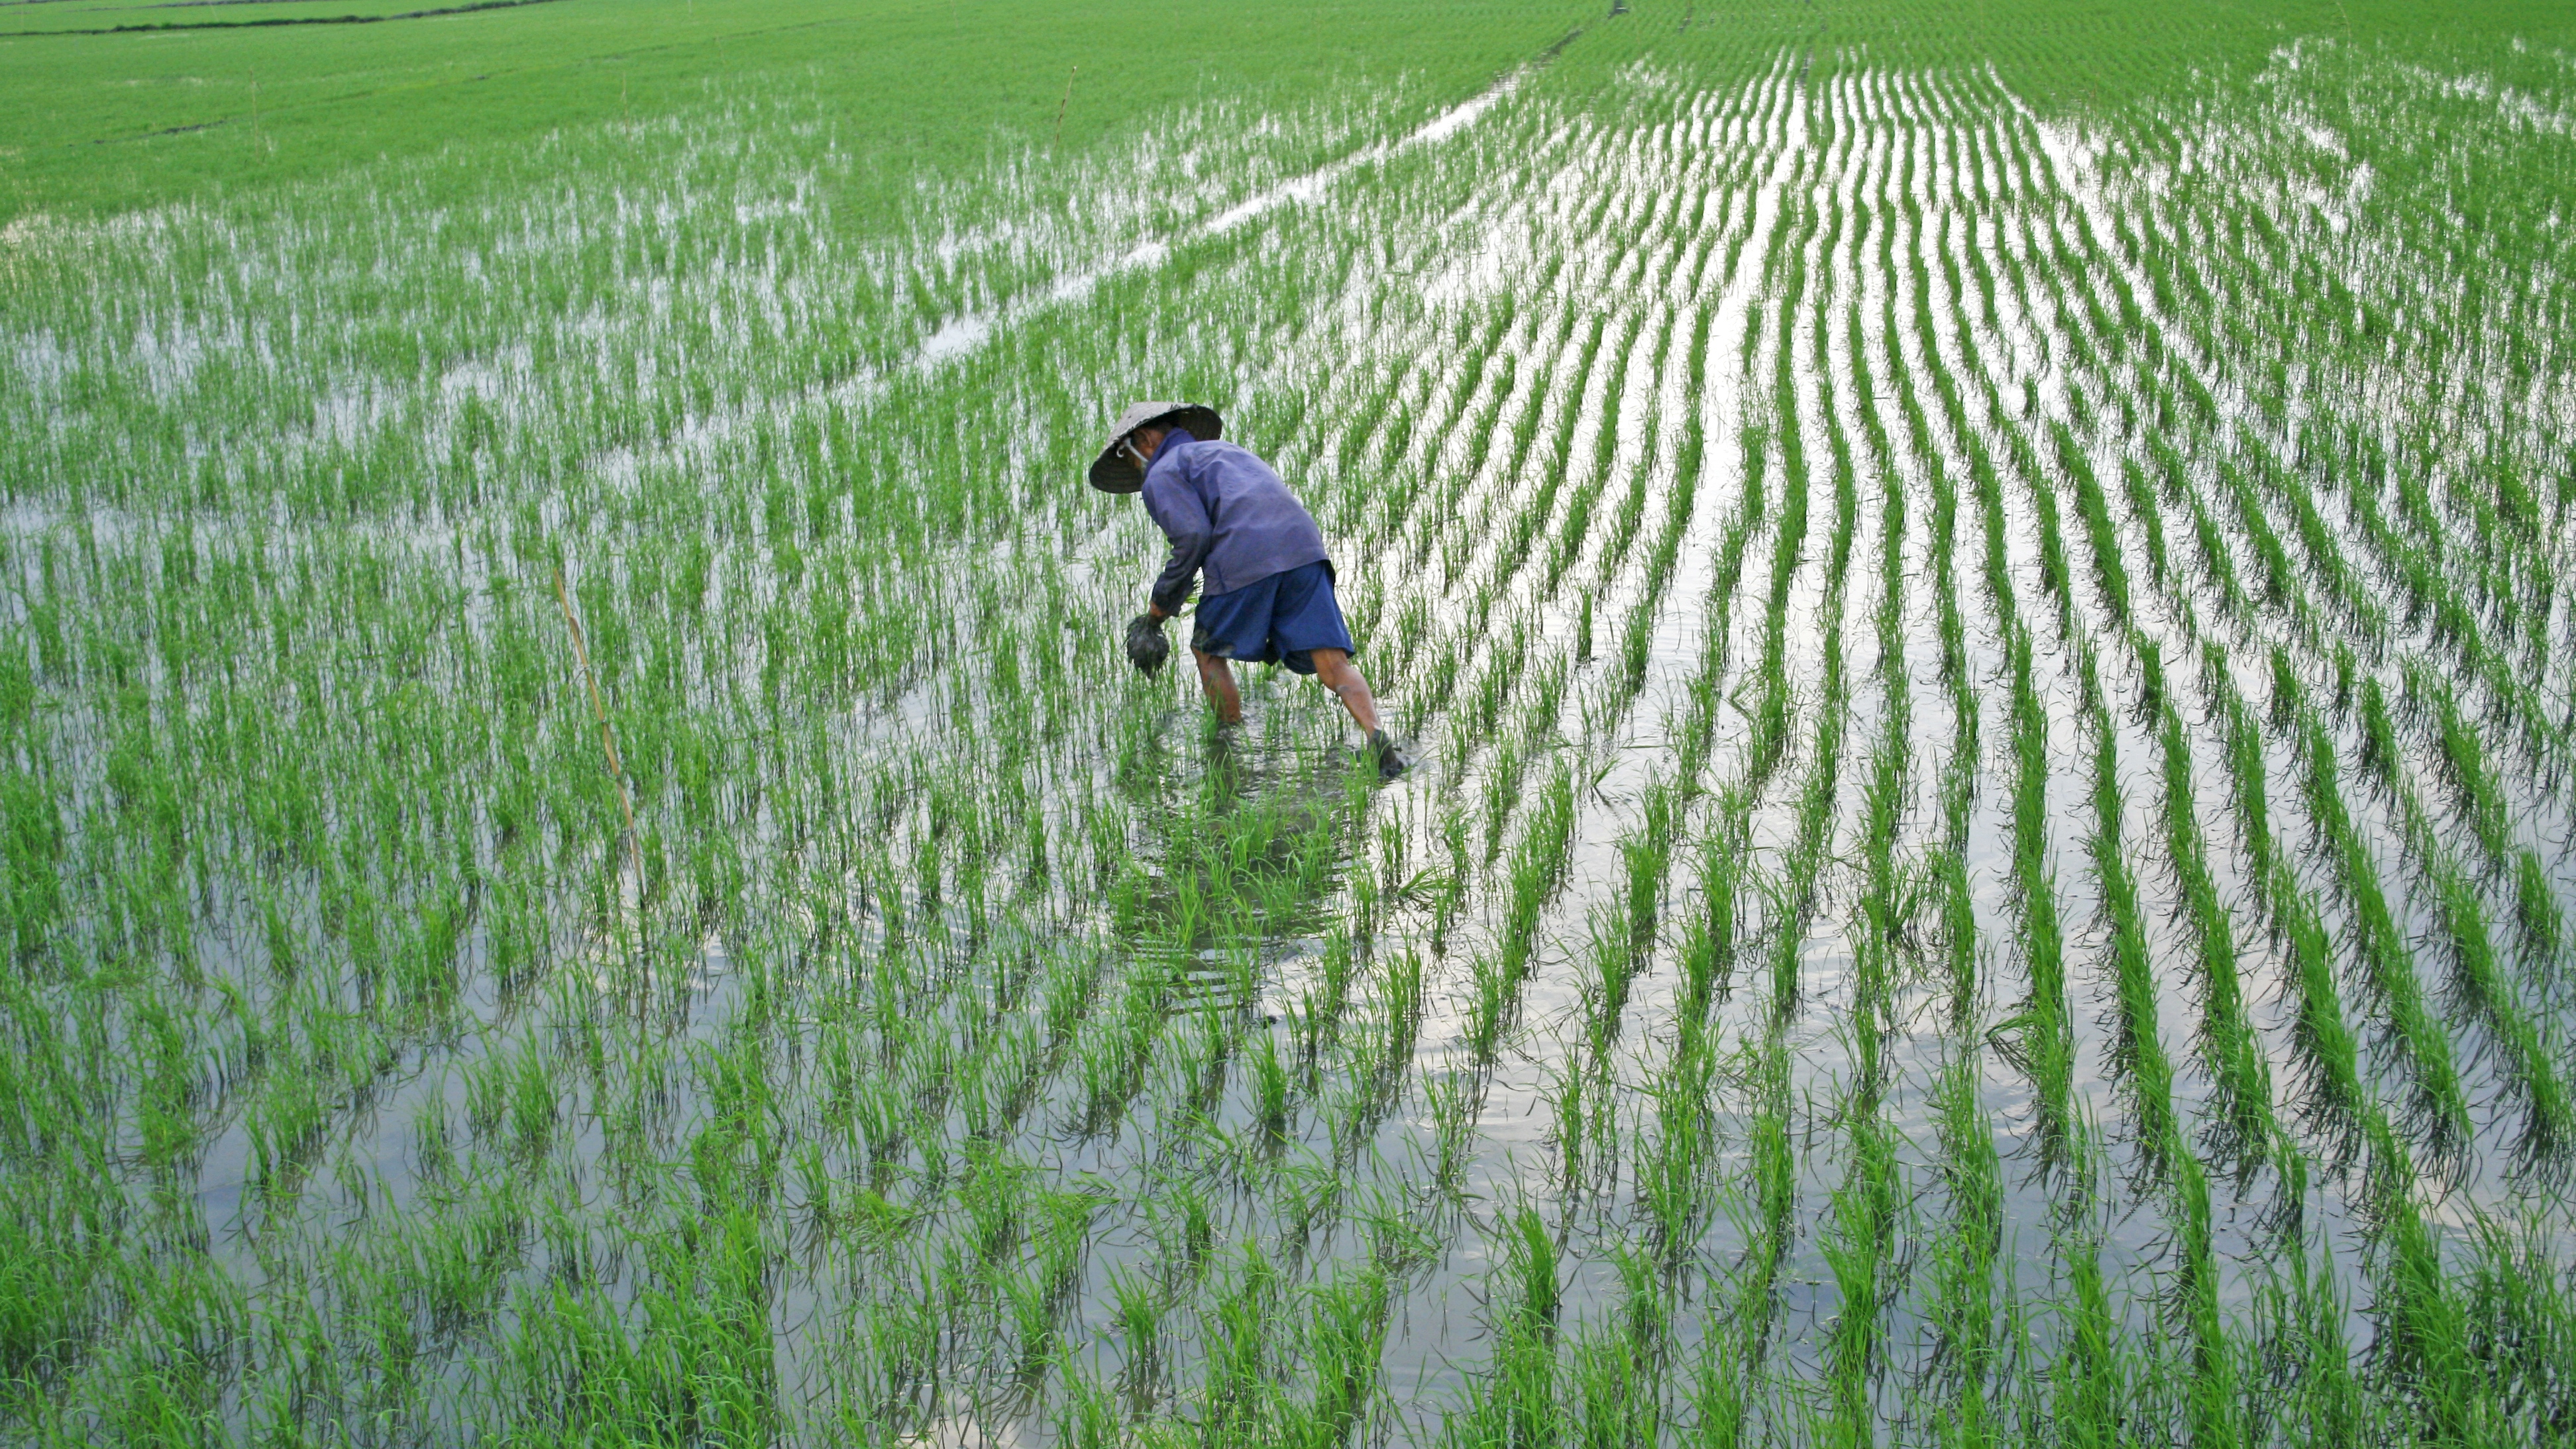 Farmer in Vietnam